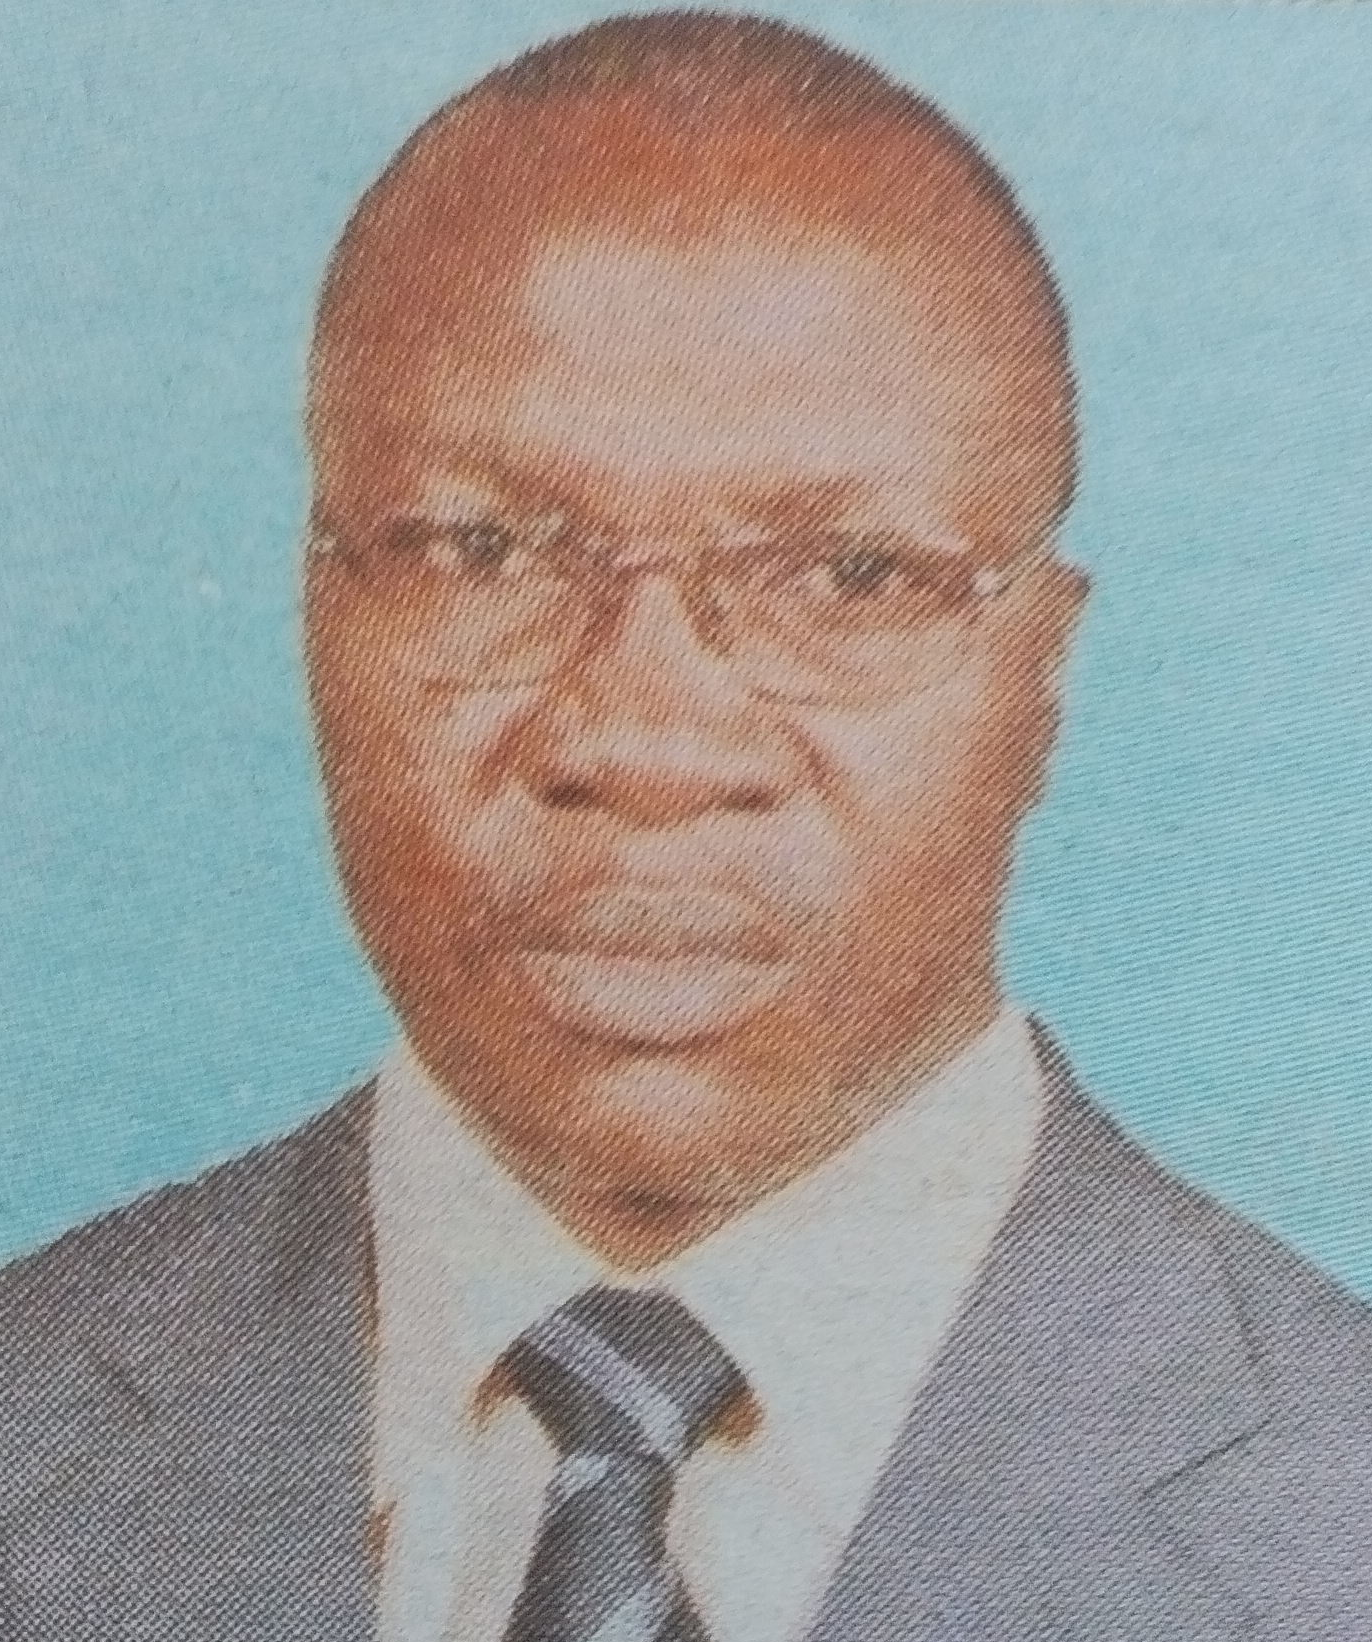 Obituary Image of Abysai Kilande Atetwe